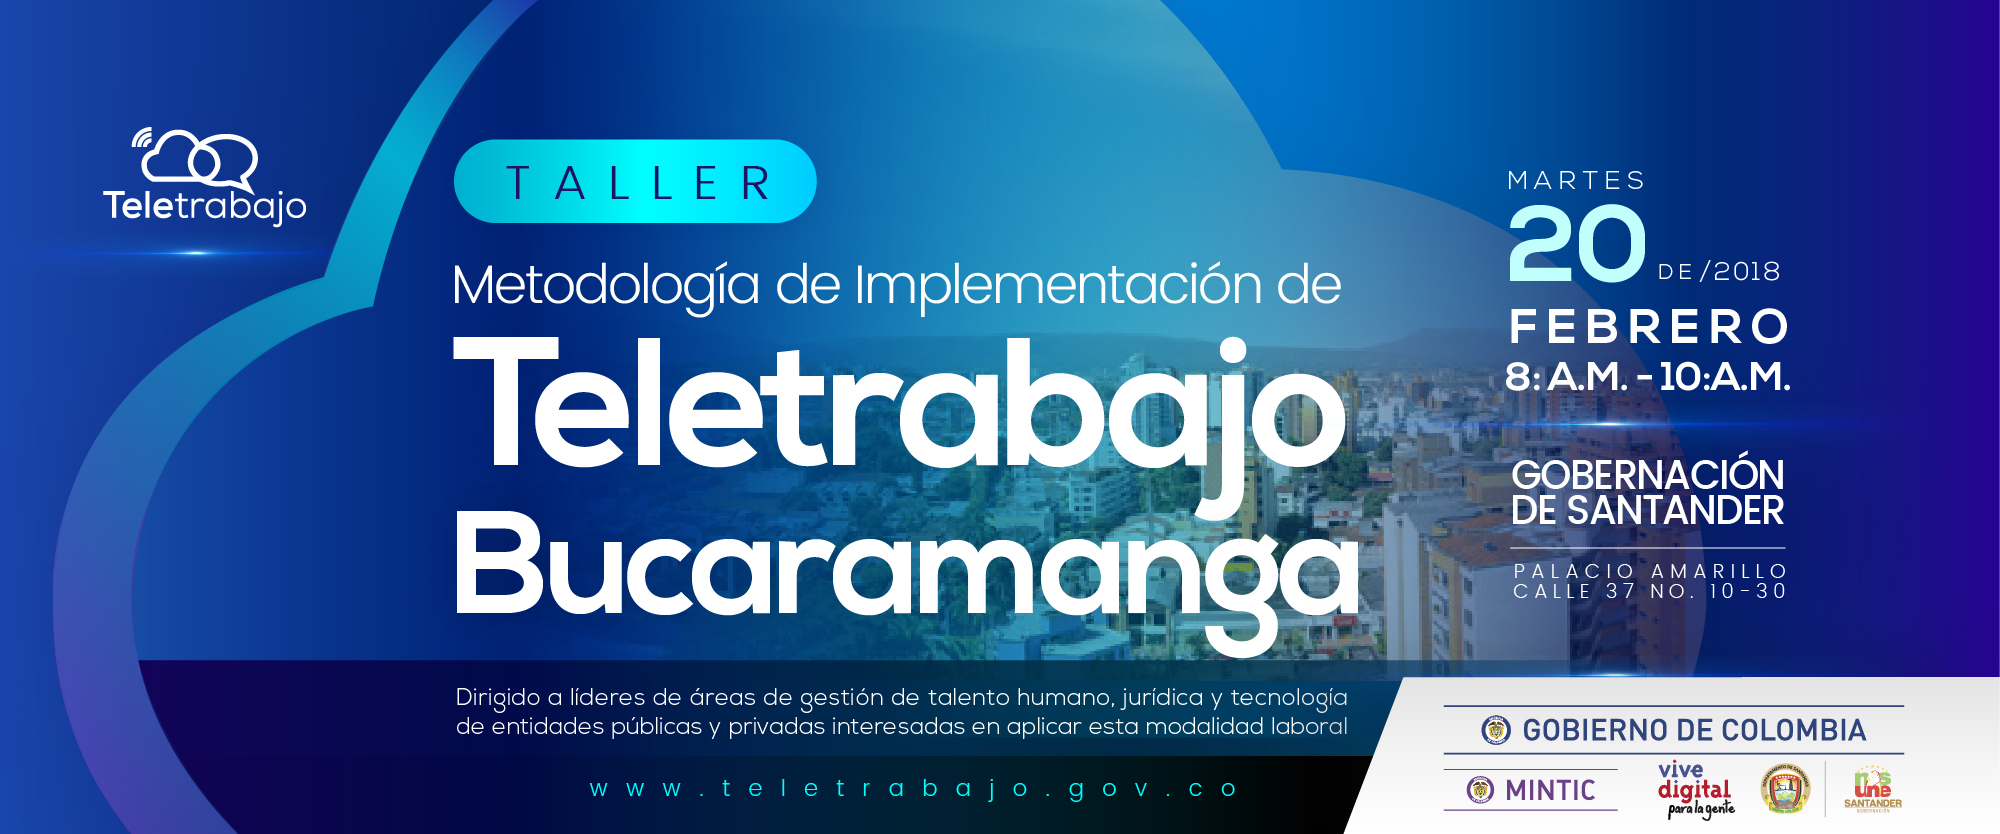 El Teletrabajo llega recargado a Bucaramanga en 2018